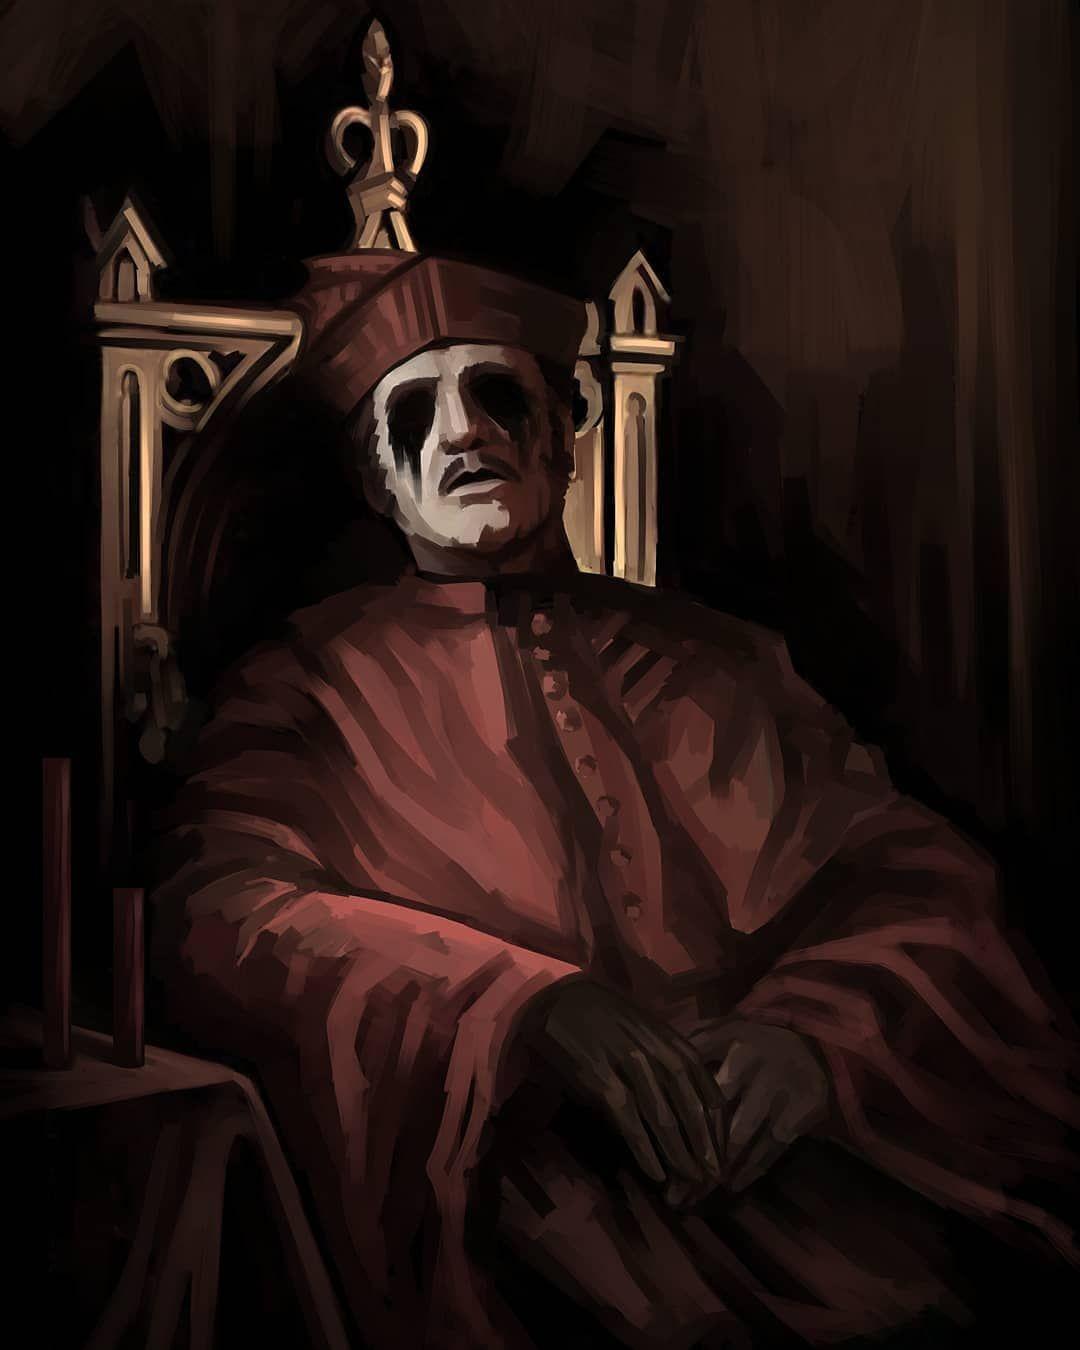 Wallpaper Ghost band doom nameless ghouls Papa Emeritus III images for  desktop section музыка  download